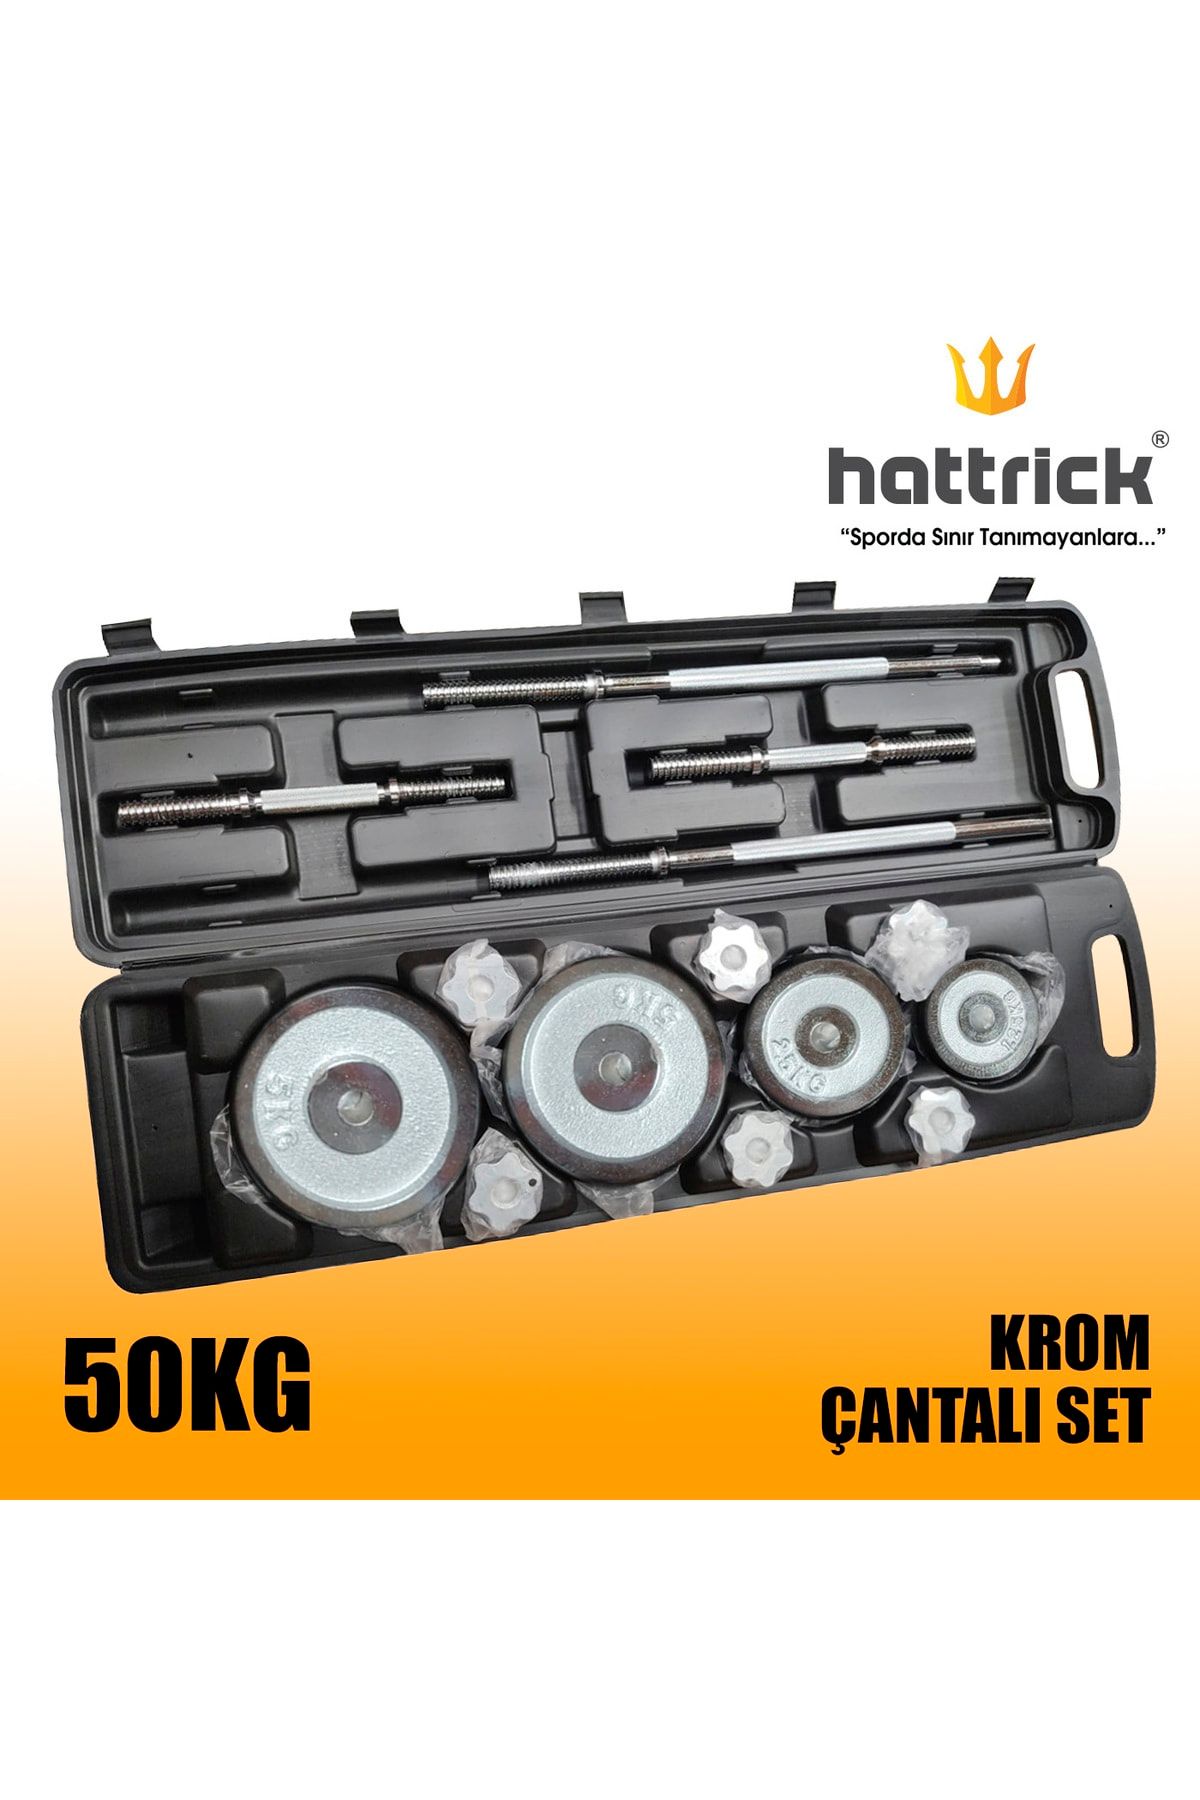 Hattrick HDK50 Krom Çantalı Set 50 Kg